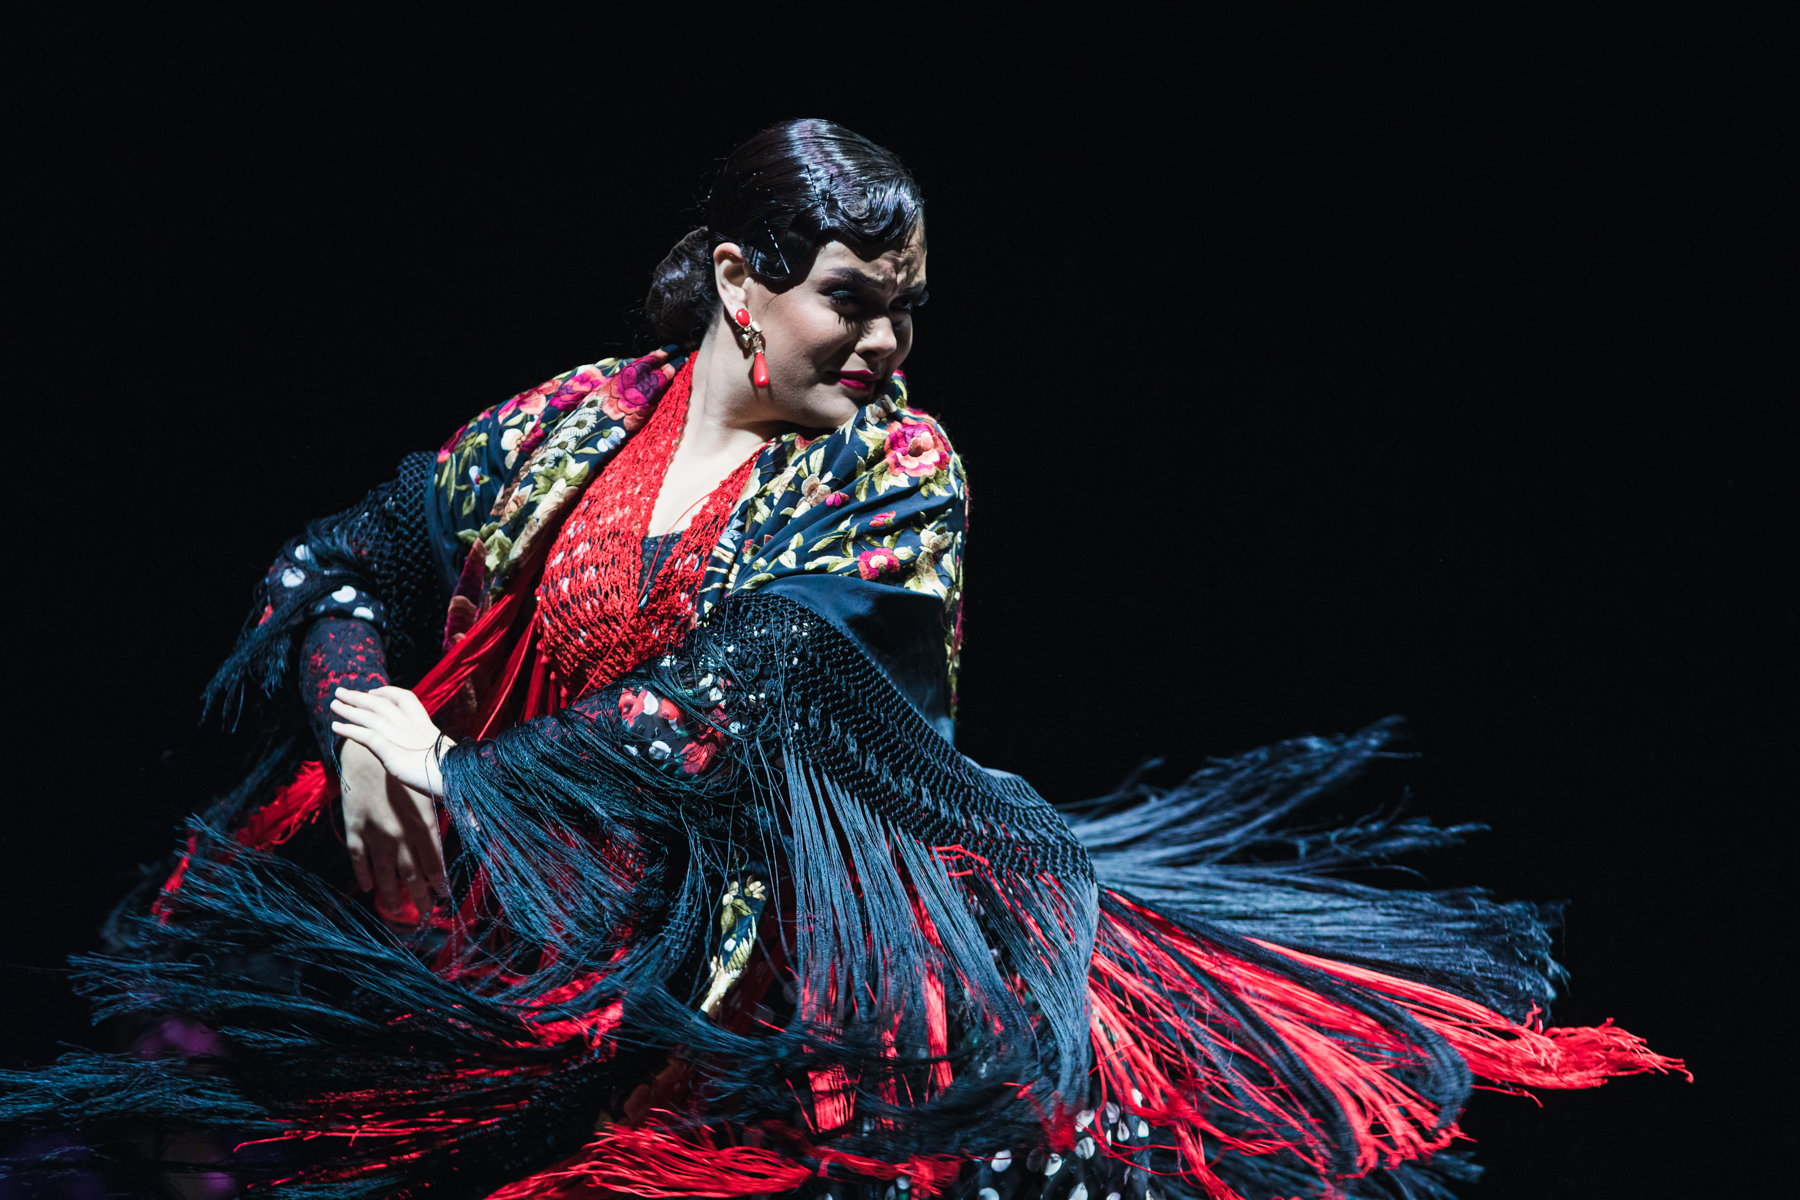 espectáculo flamenco compañía bailaora